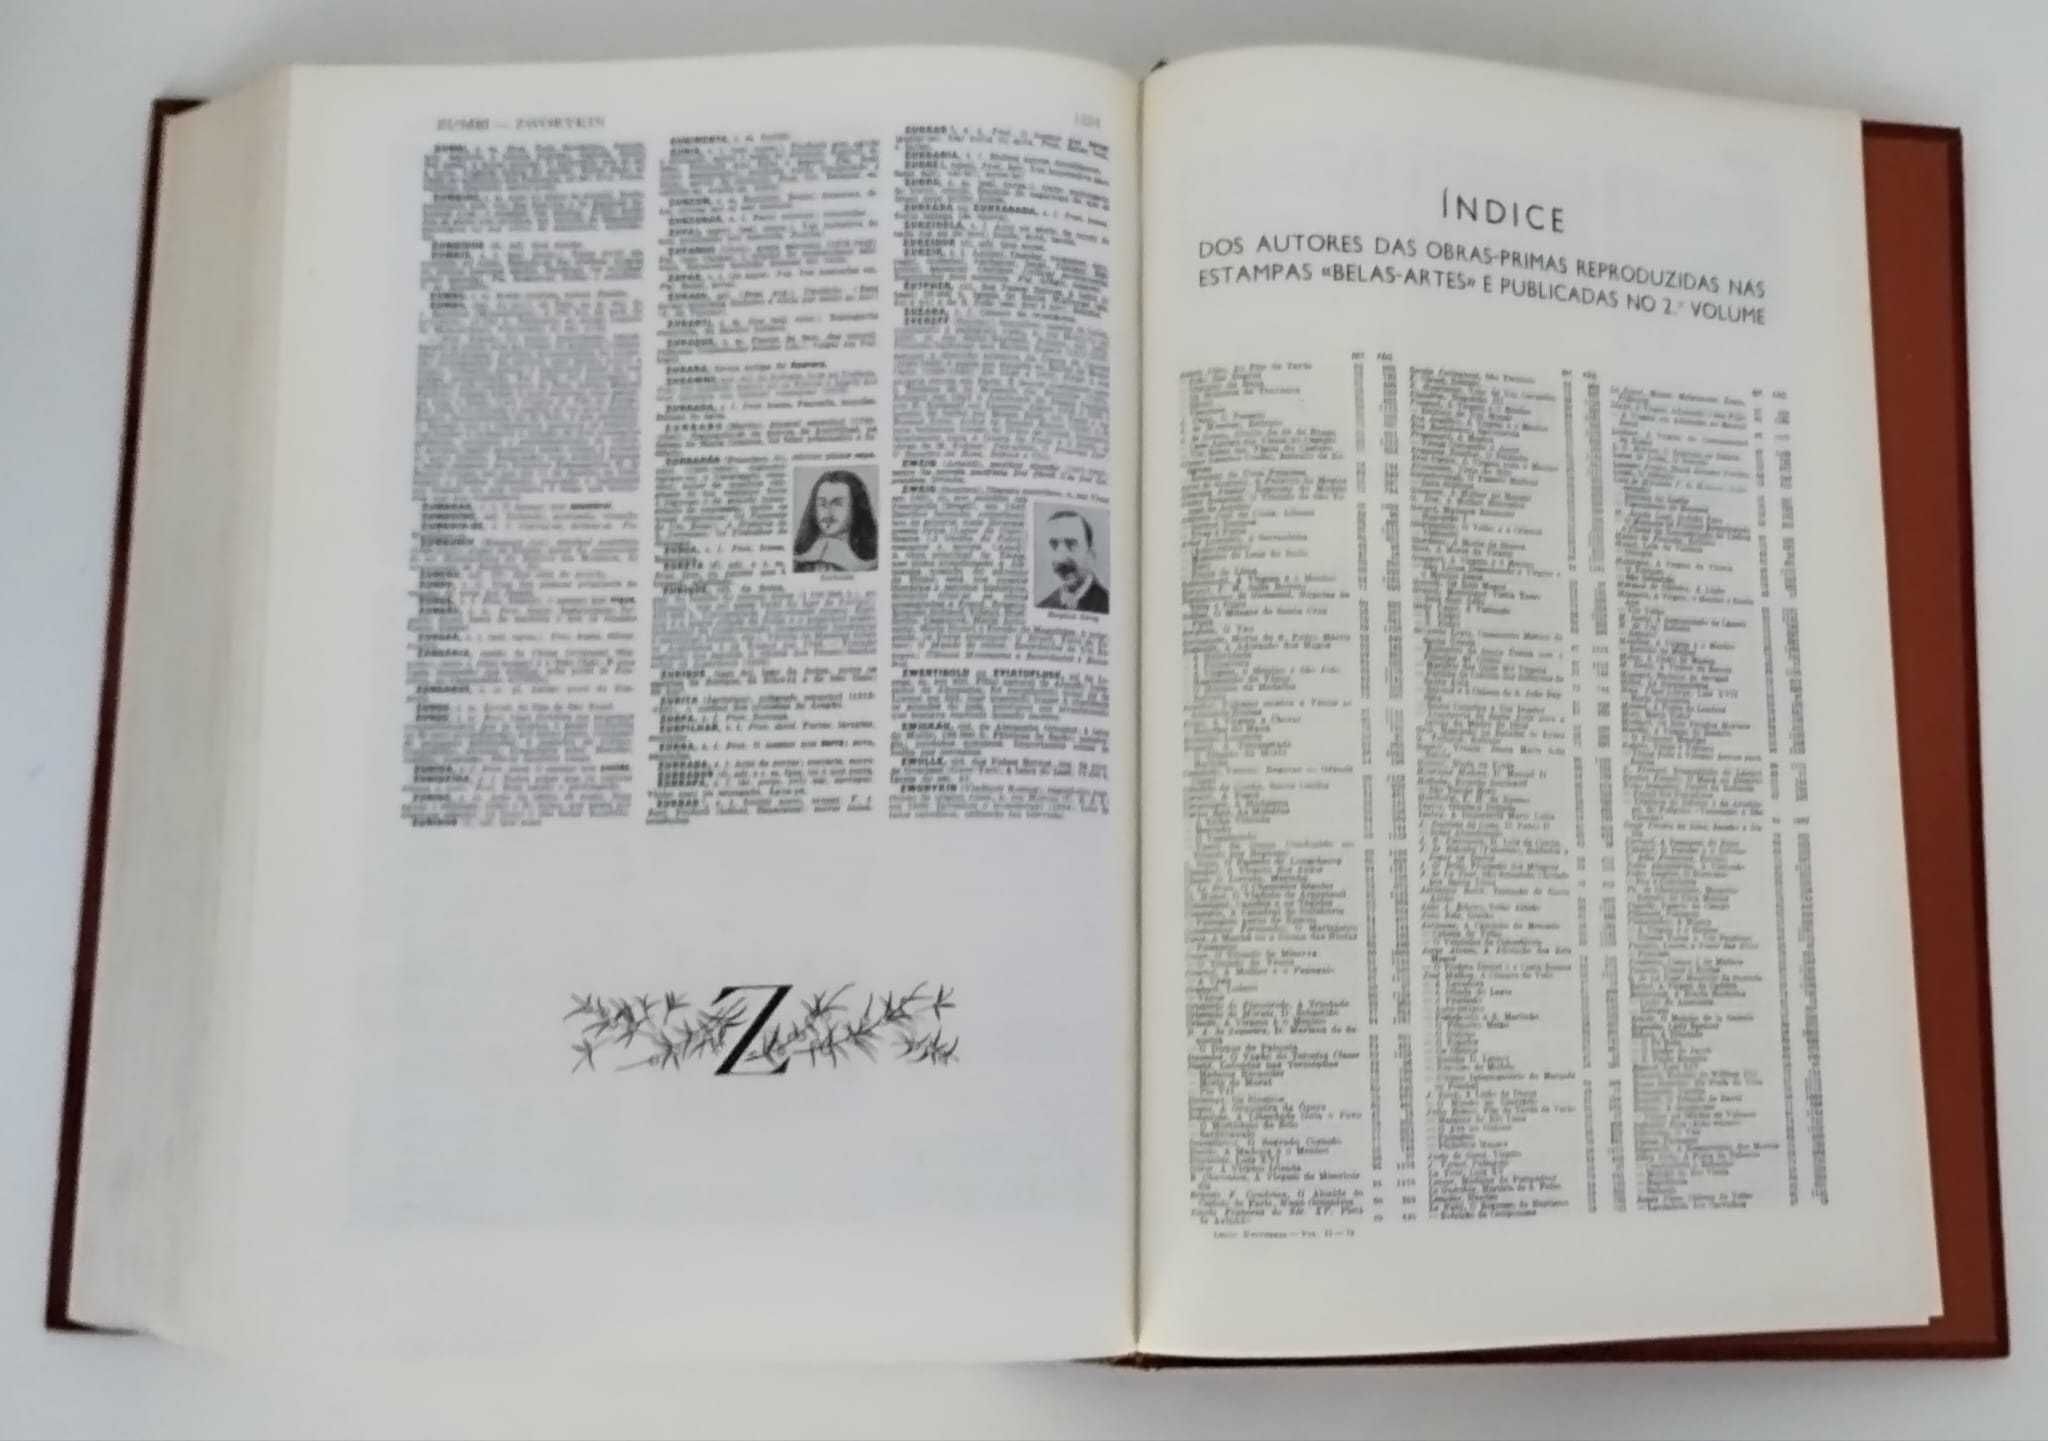 Lello Universal – Volume 2, Dicionário Enciclopédico Luso-Brasileiro